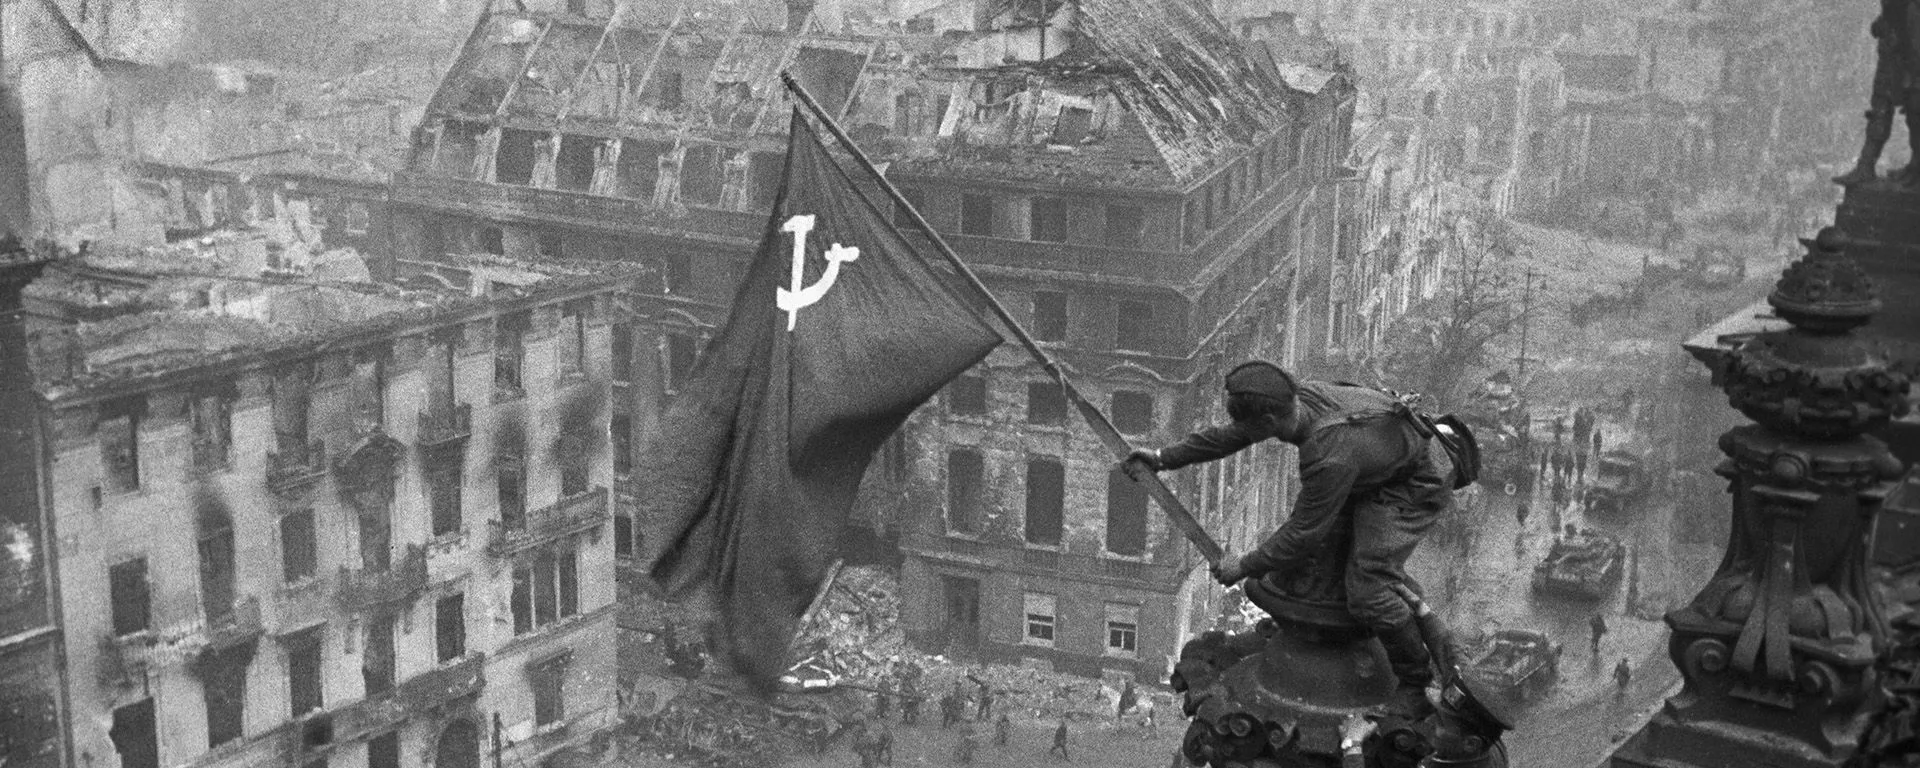 поднятие флага над рейхстагом фото